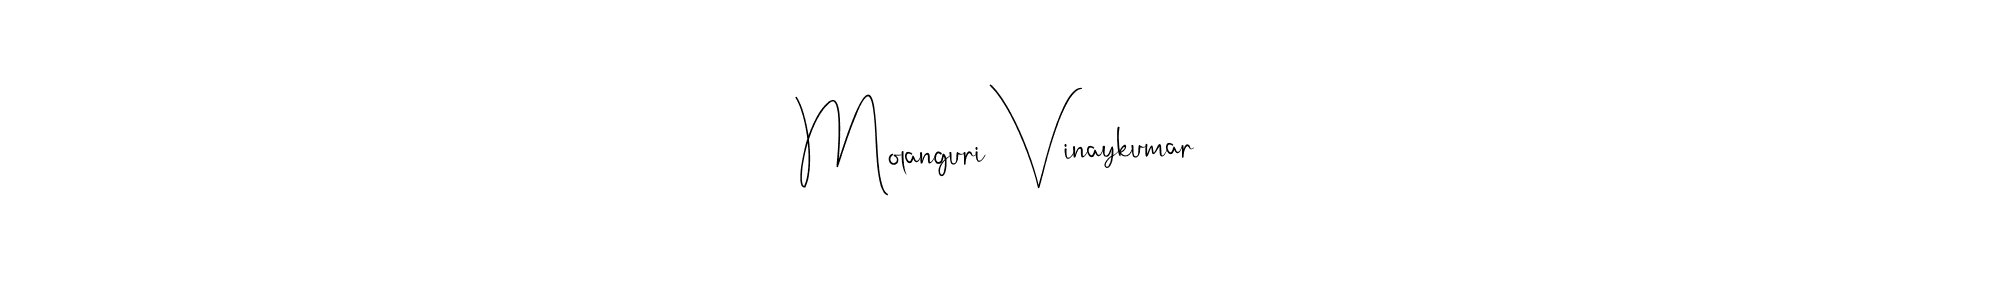 How to Draw Molanguri Vinaykumar signature style? Andilay-7BmLP is a latest design signature styles for name Molanguri Vinaykumar. Molanguri Vinaykumar signature style 4 images and pictures png